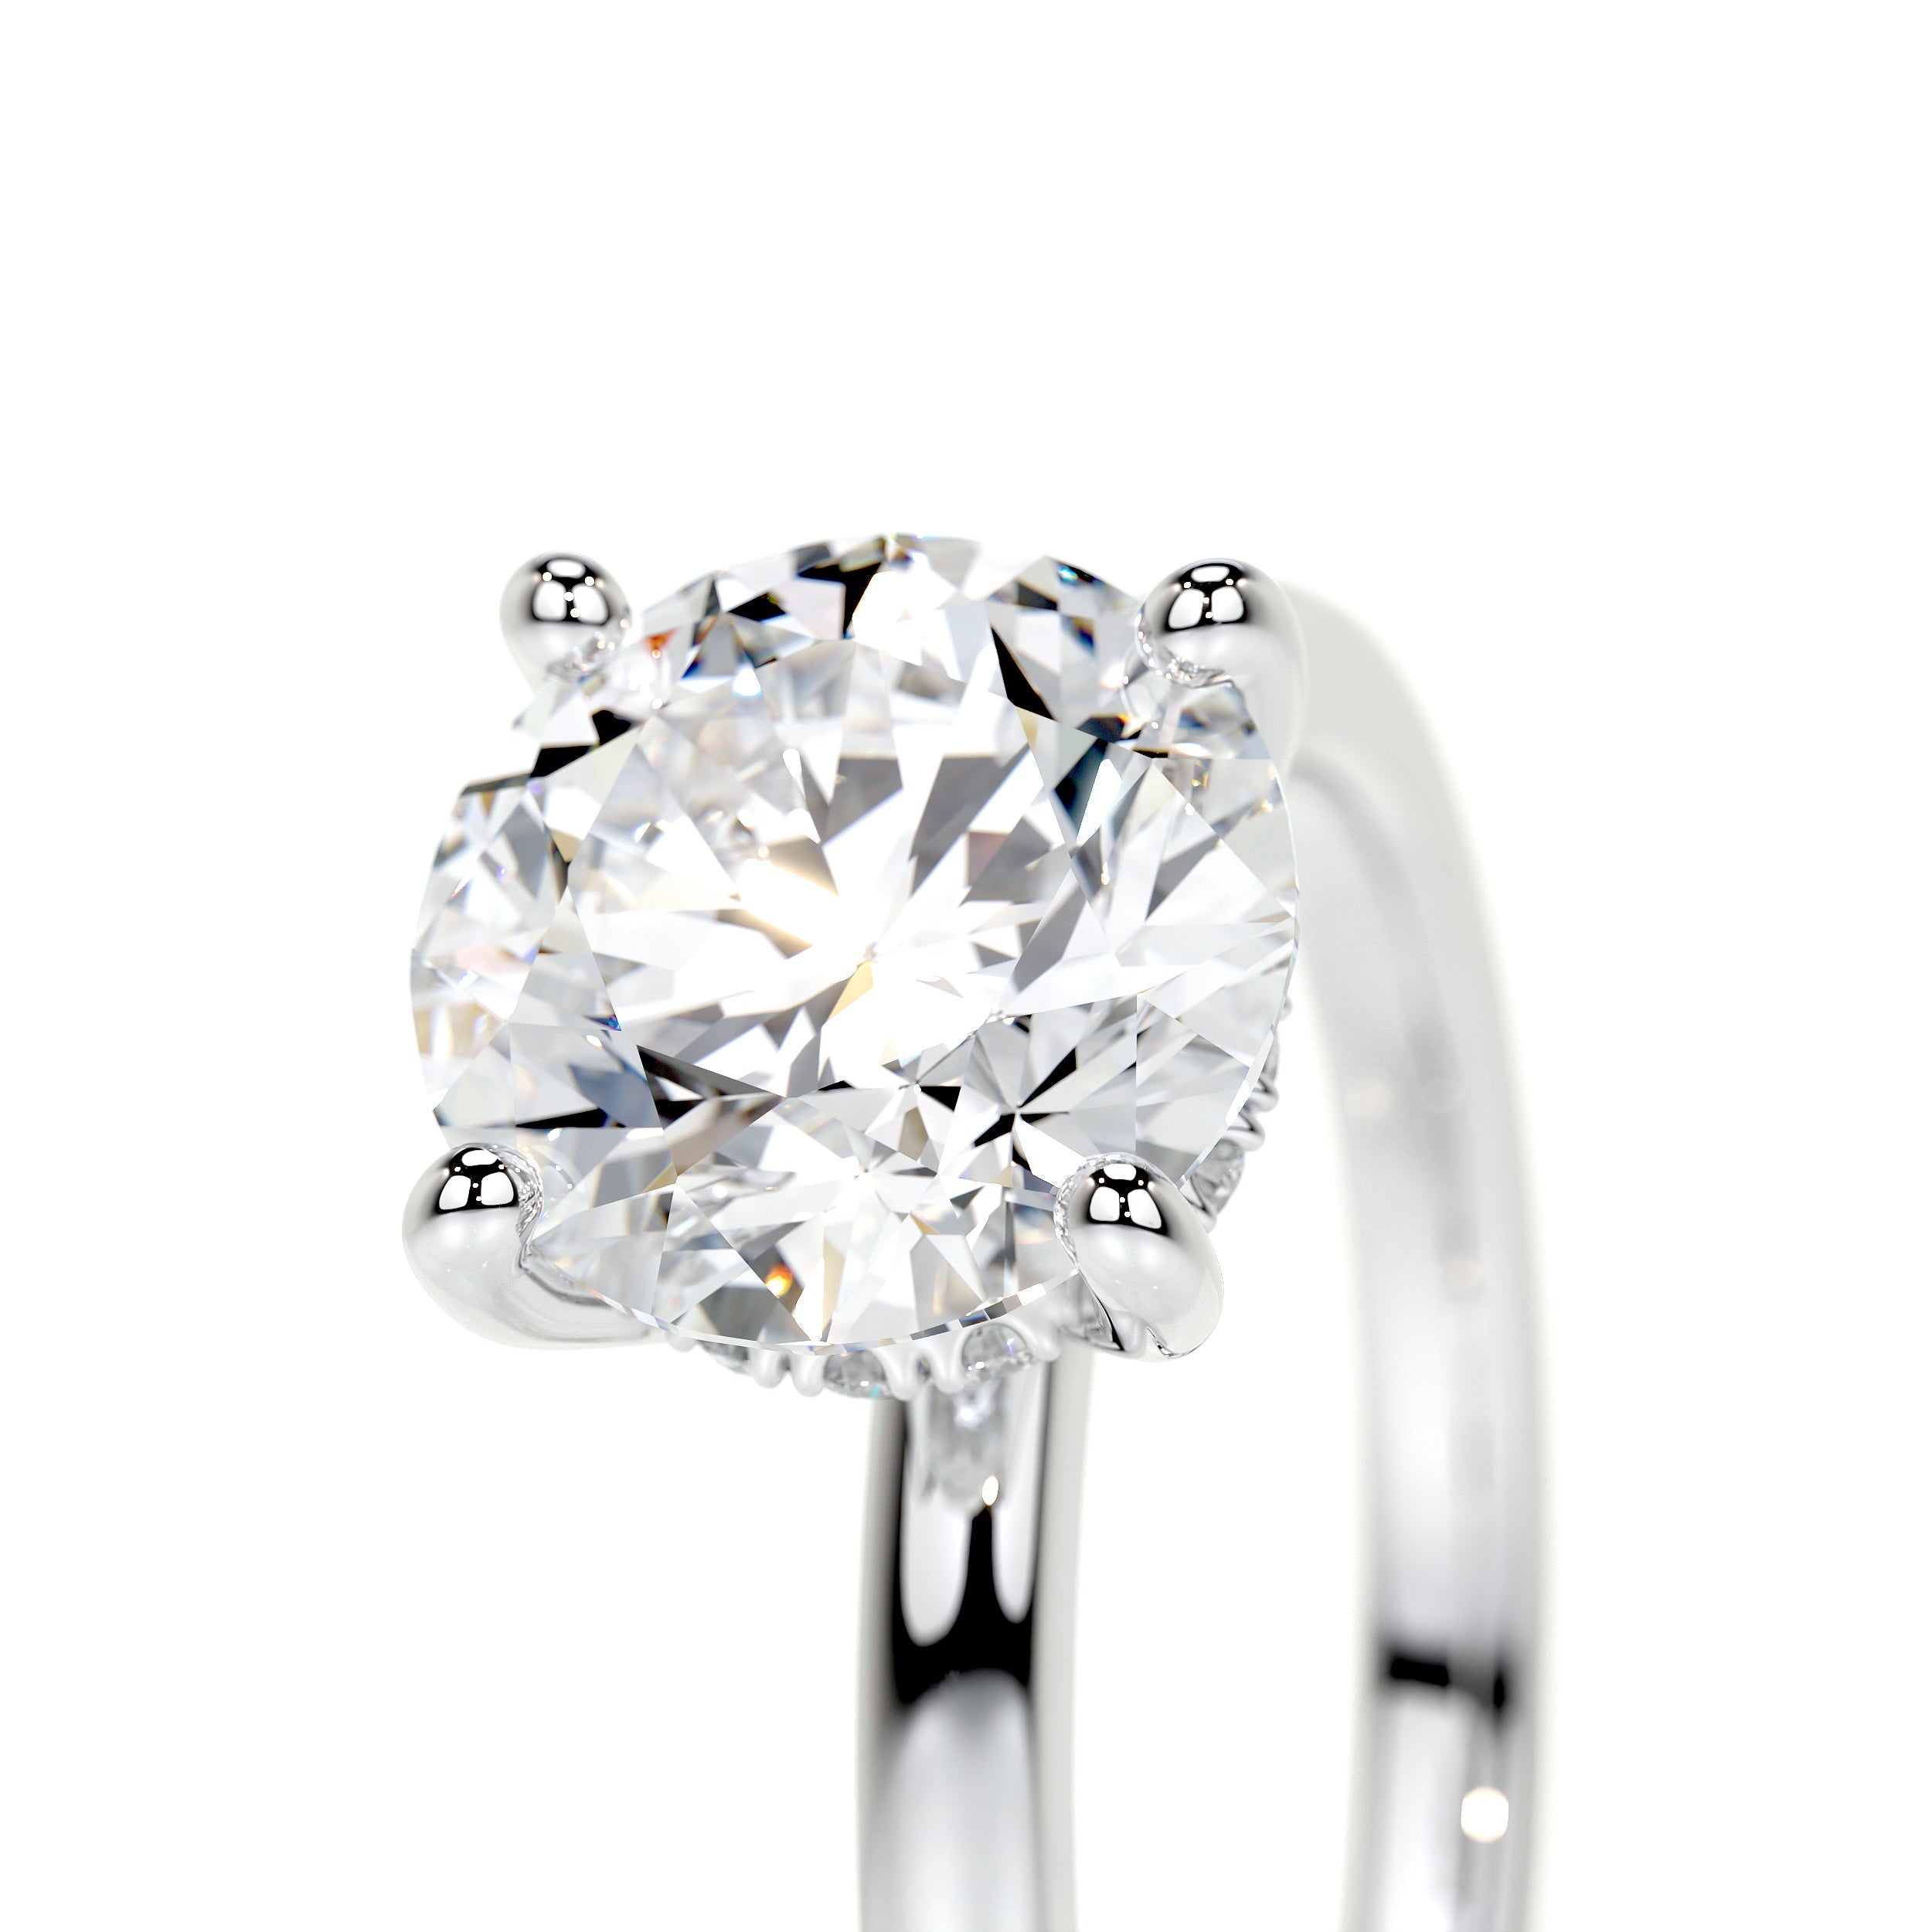 Cynthia Lab Grown Diamond Ring   (2.1 Carat) -Platinum